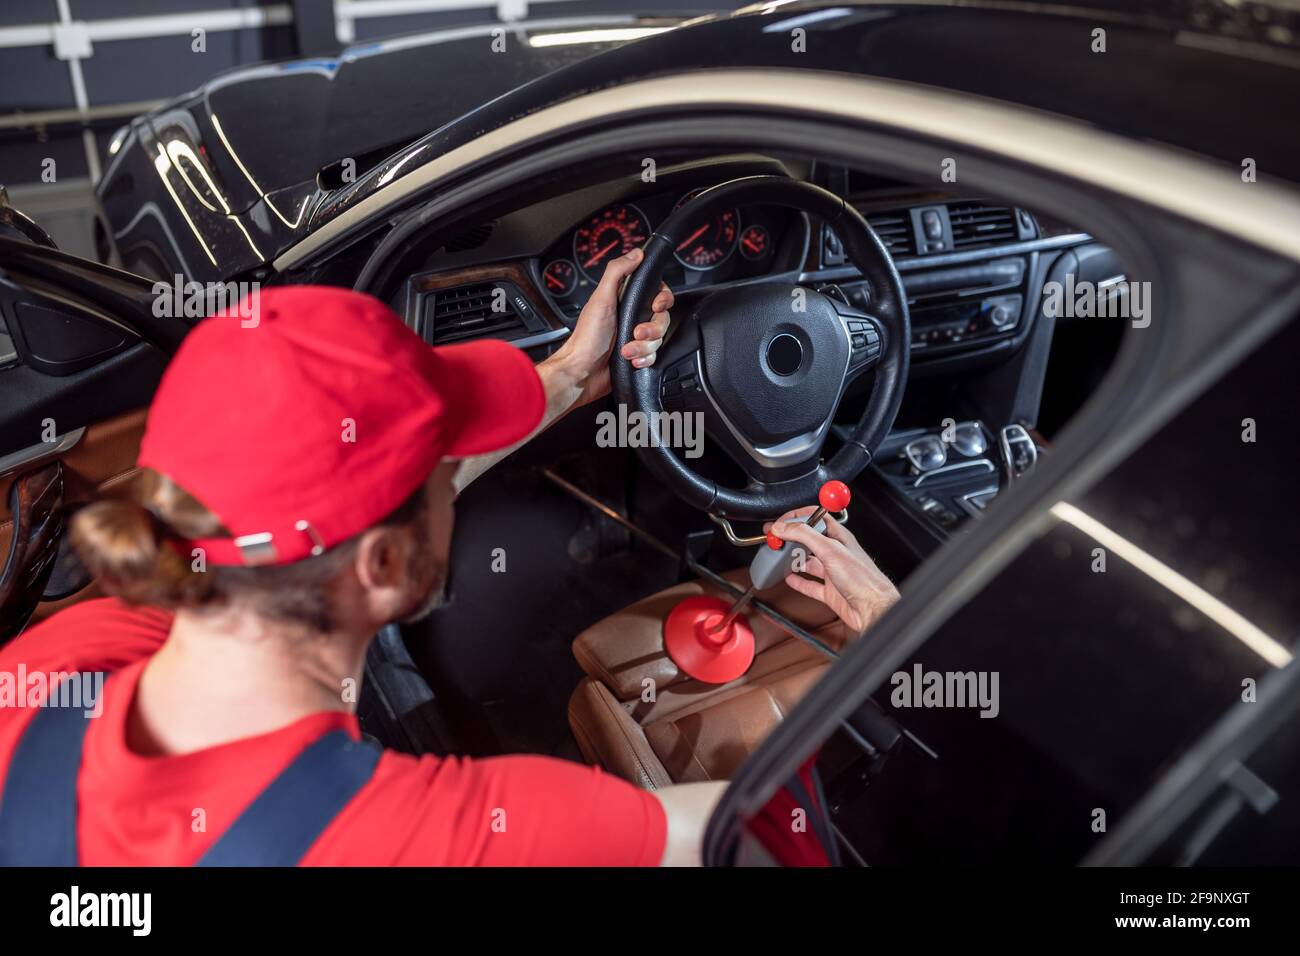 Car service worker adjusting steering wheel in car Stock Photo